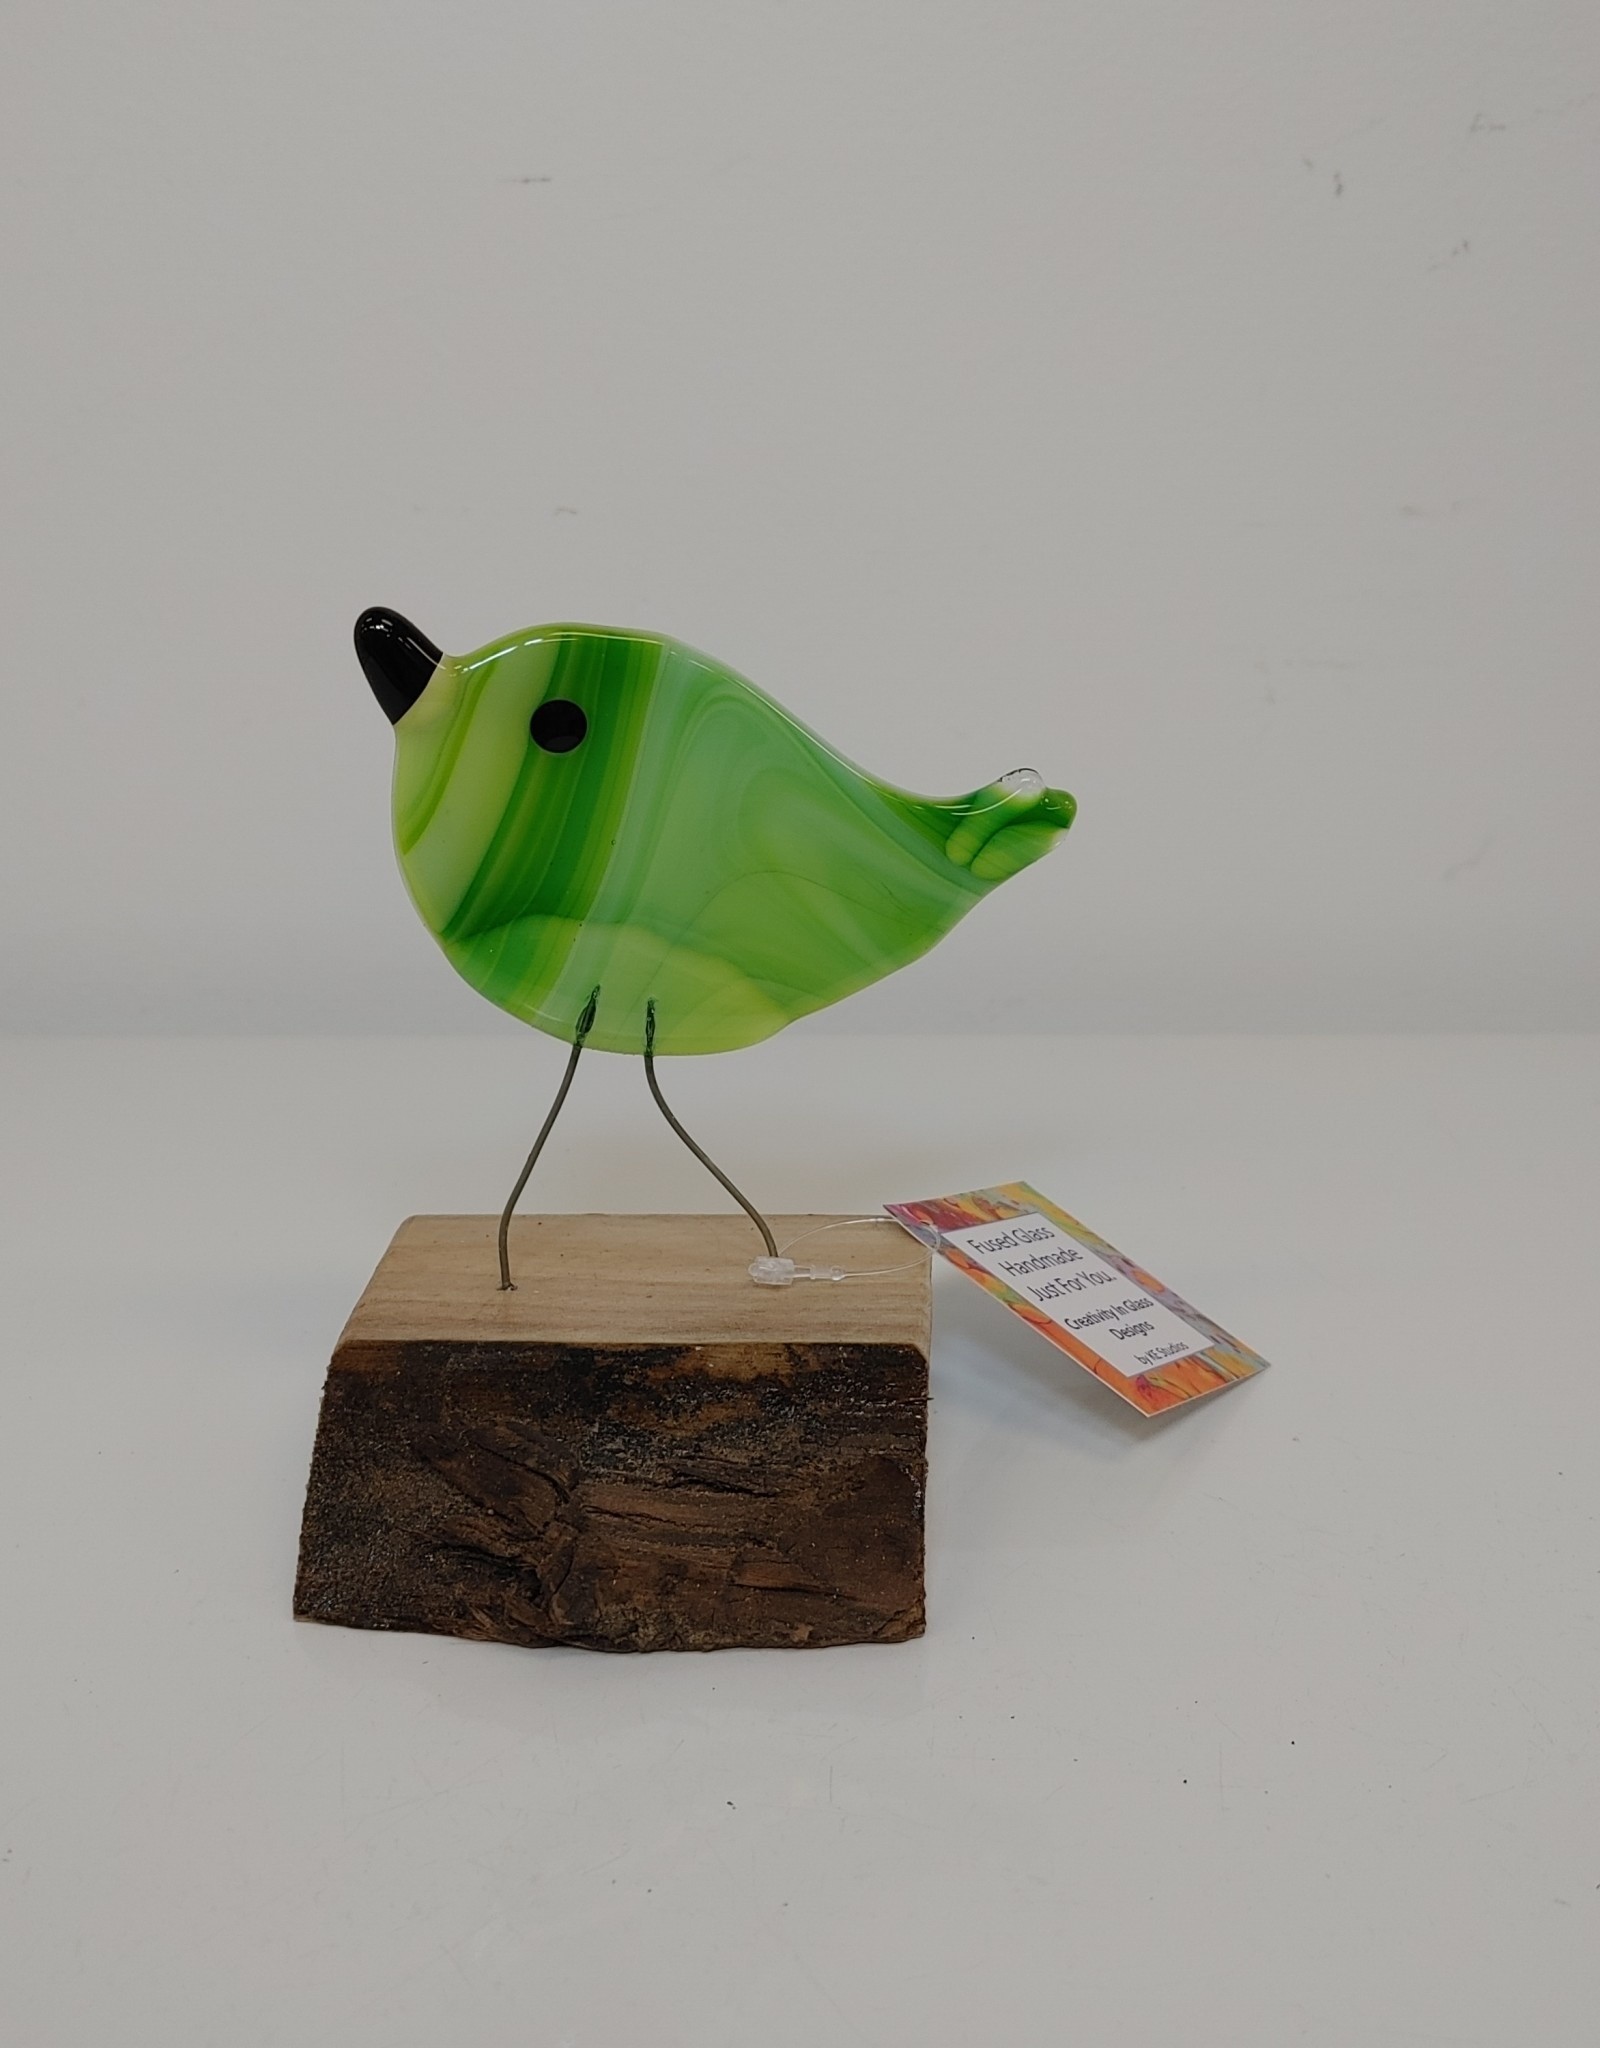 Single Bird on Wood - Green/Turquoise/White